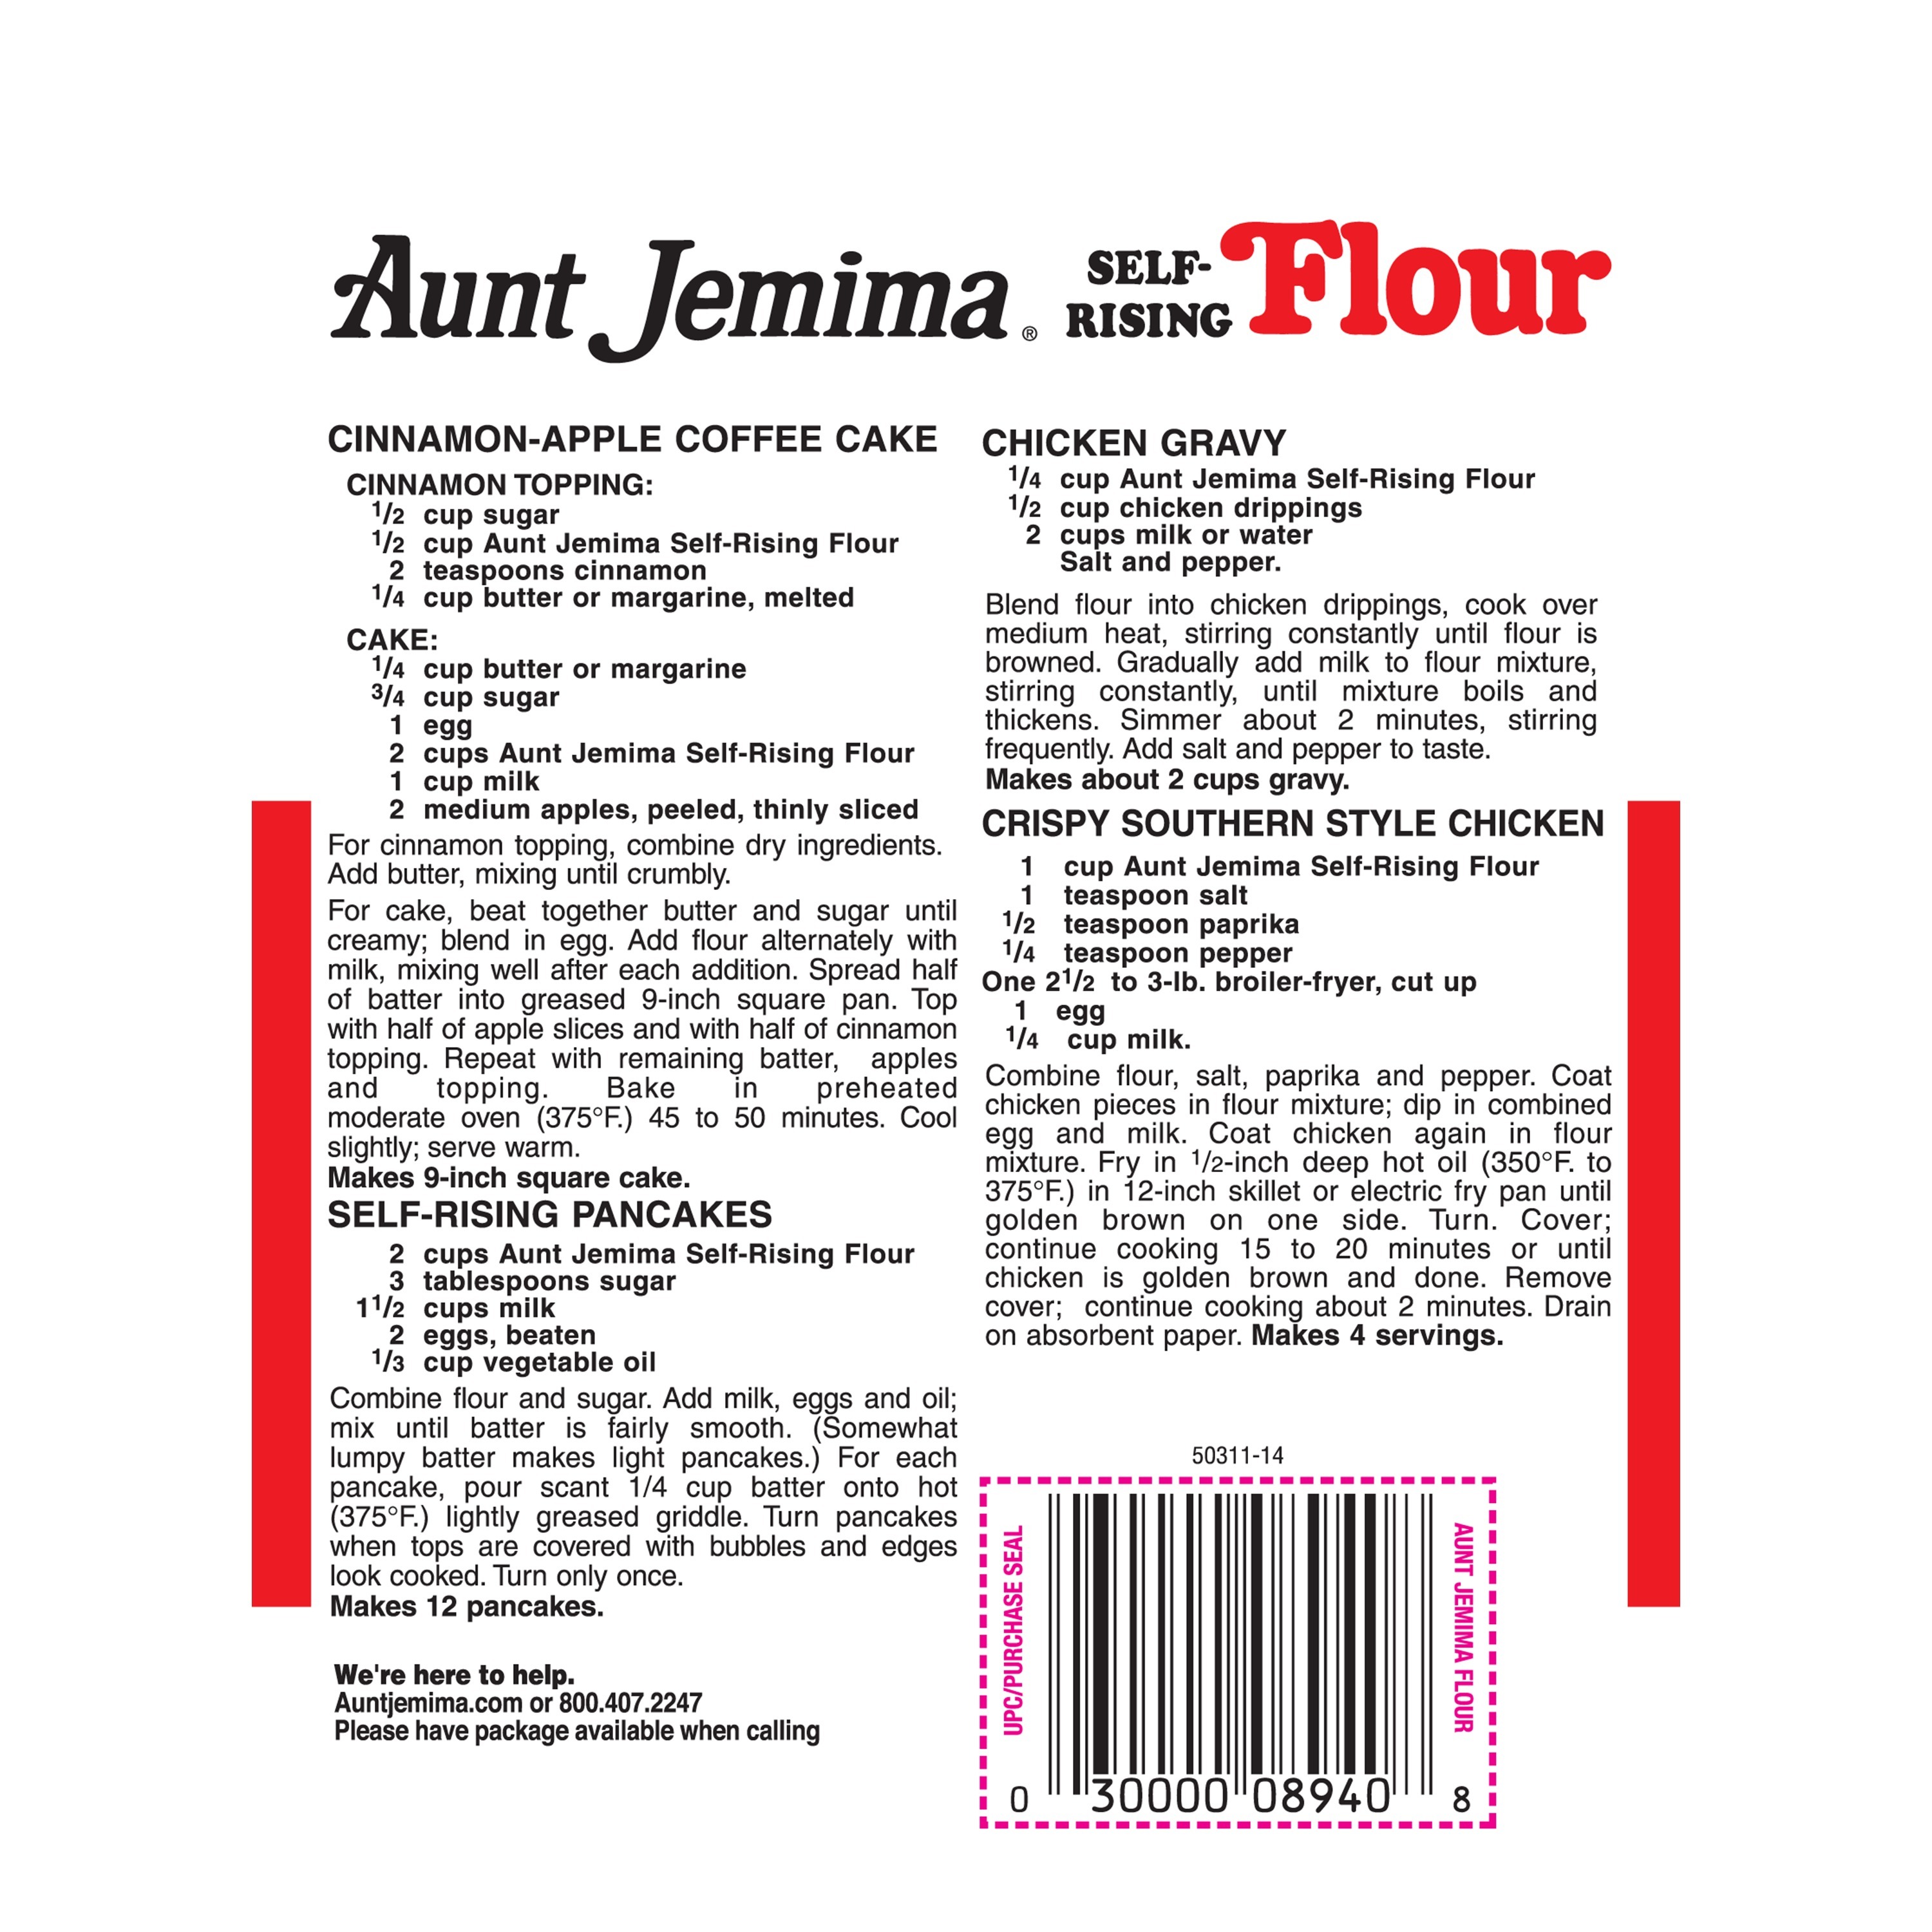 Aunt Jemima Self-Rising Flour, 5 lb Bag - image 2 of 7